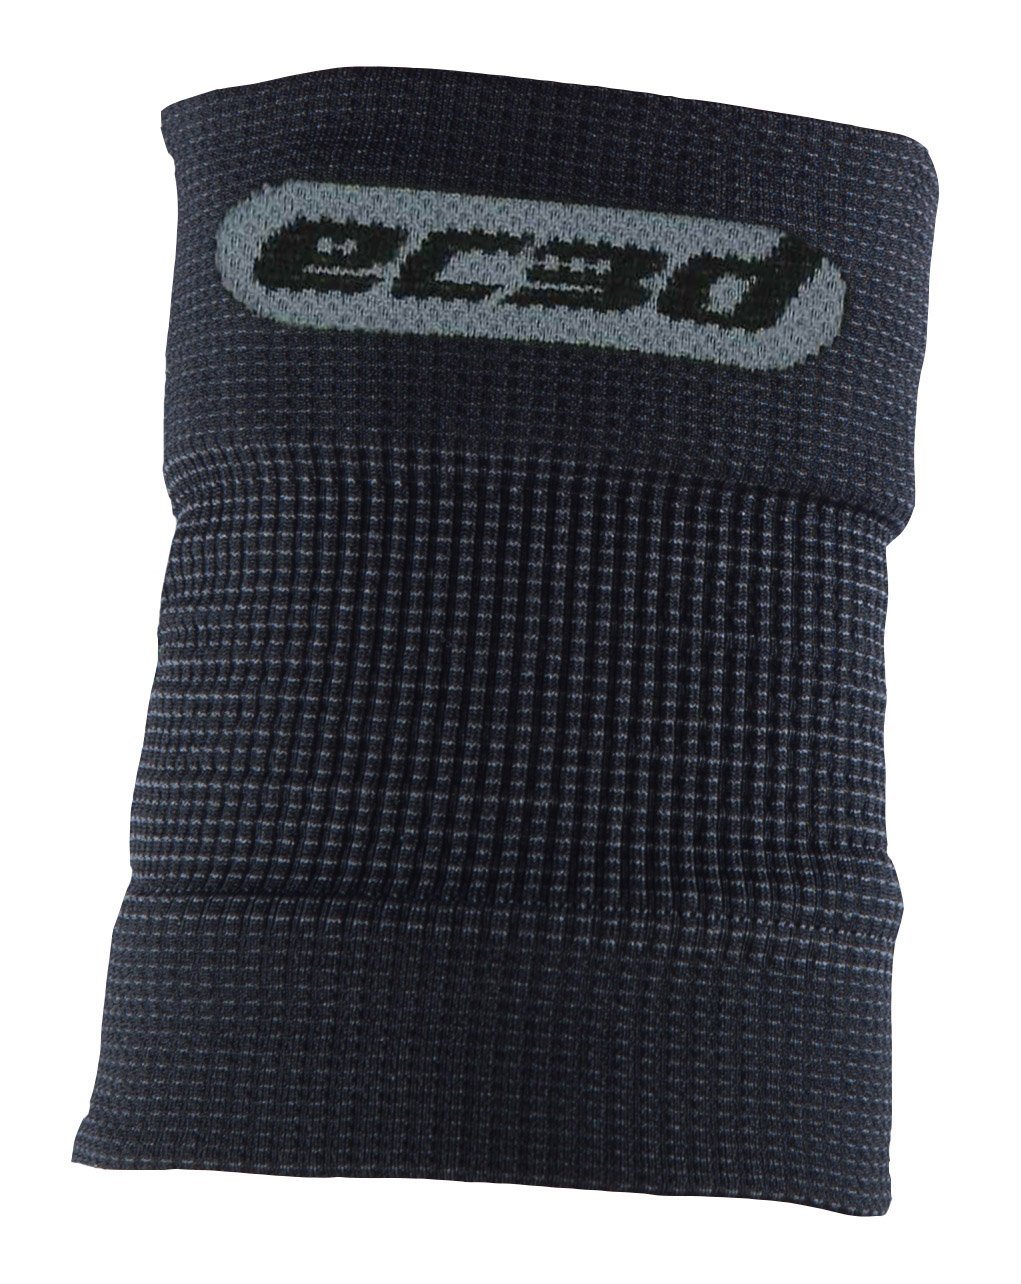 EC3D Wrist Compression Support 3D 985-MBK – Sports Virtuoso